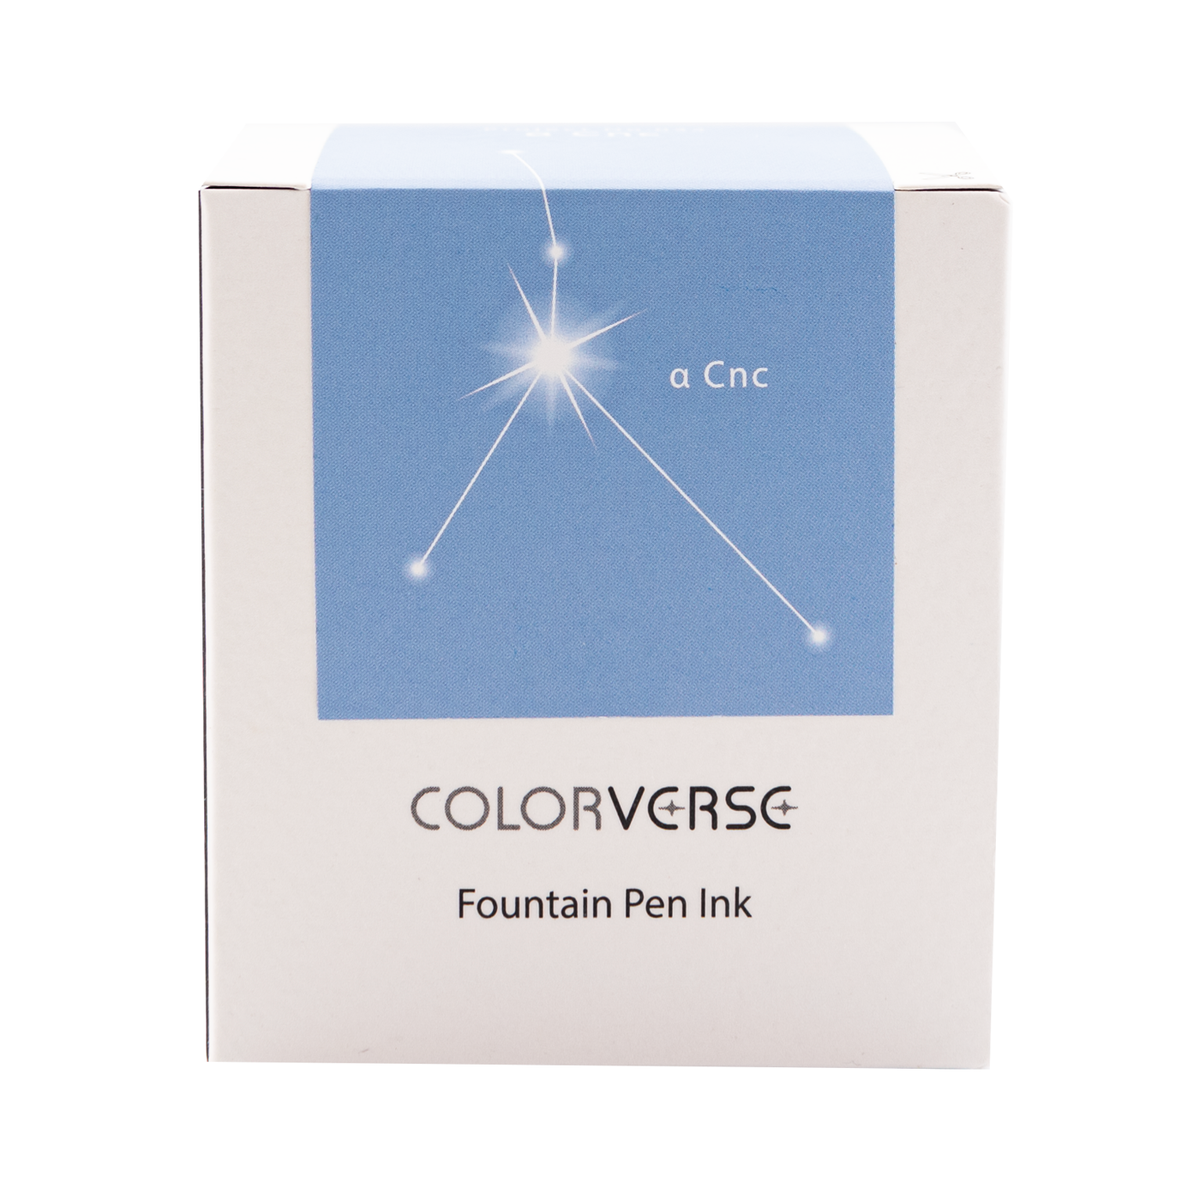 Colorverse Project Vol. 5  Constellation II. 034 - a Cnc